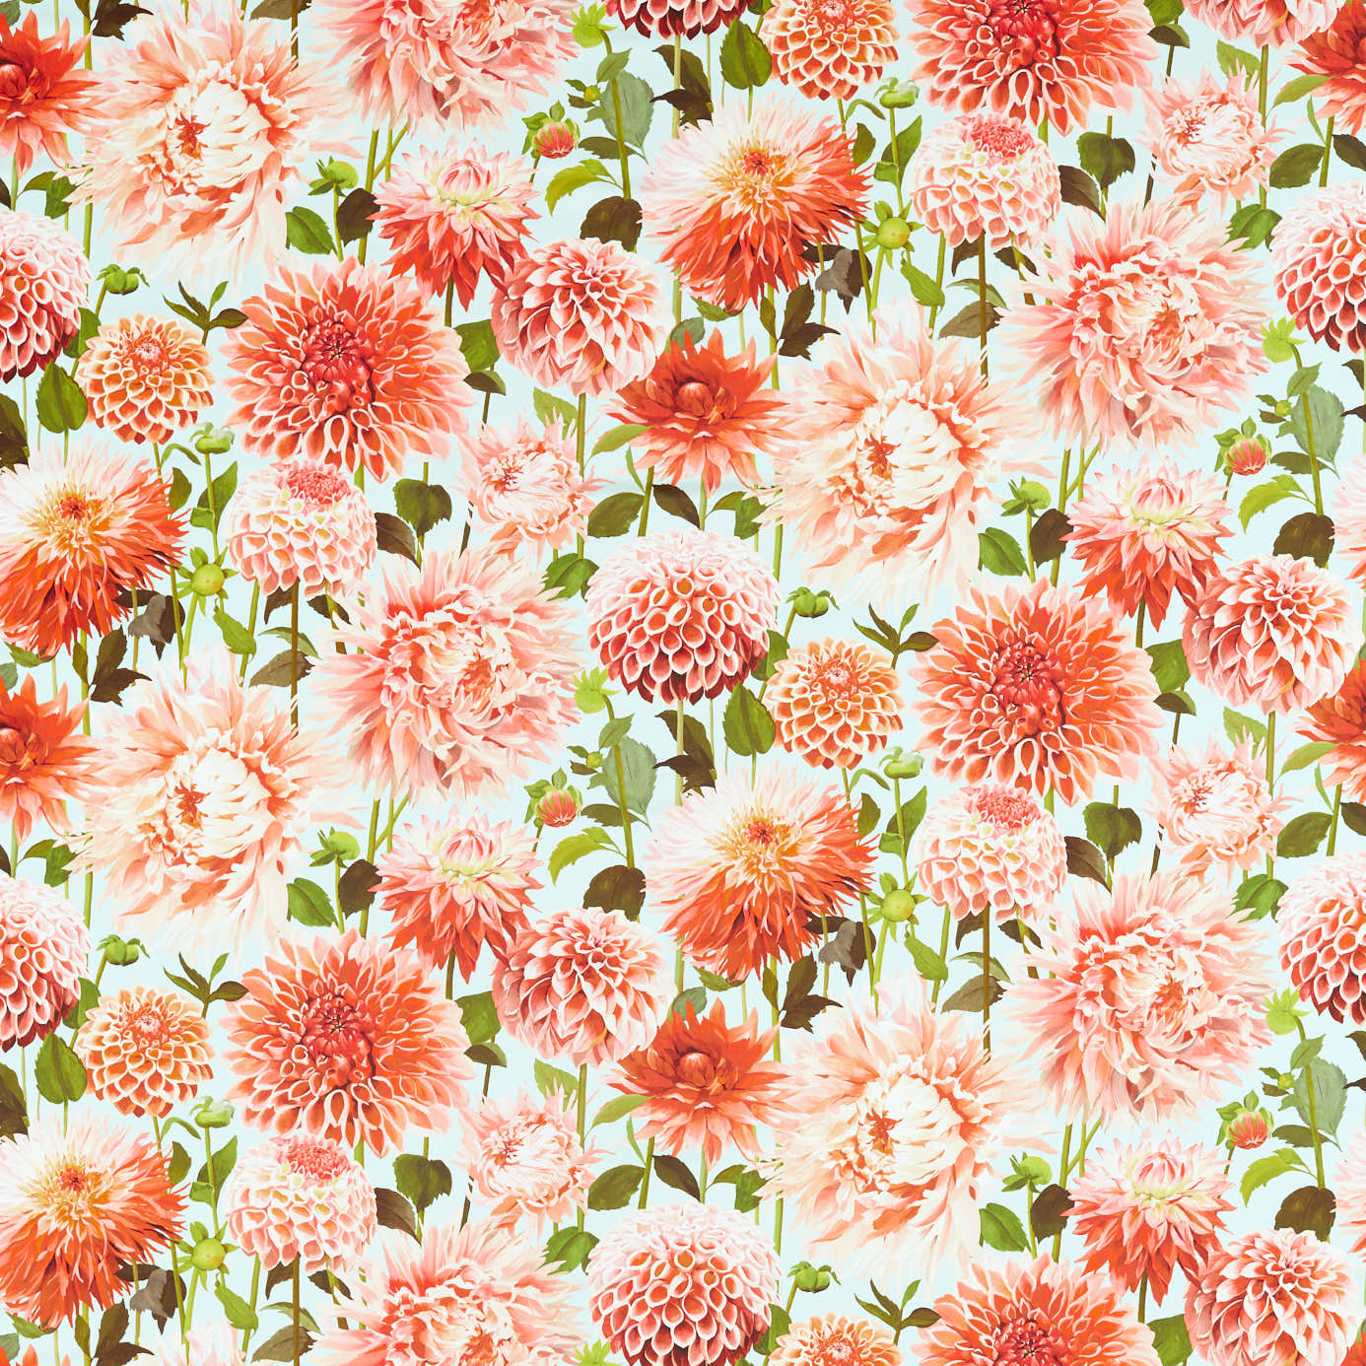 Dahlia Fabric by Harlequin - HQN2121083 - Coral/Fig Leaf/Sky������������������